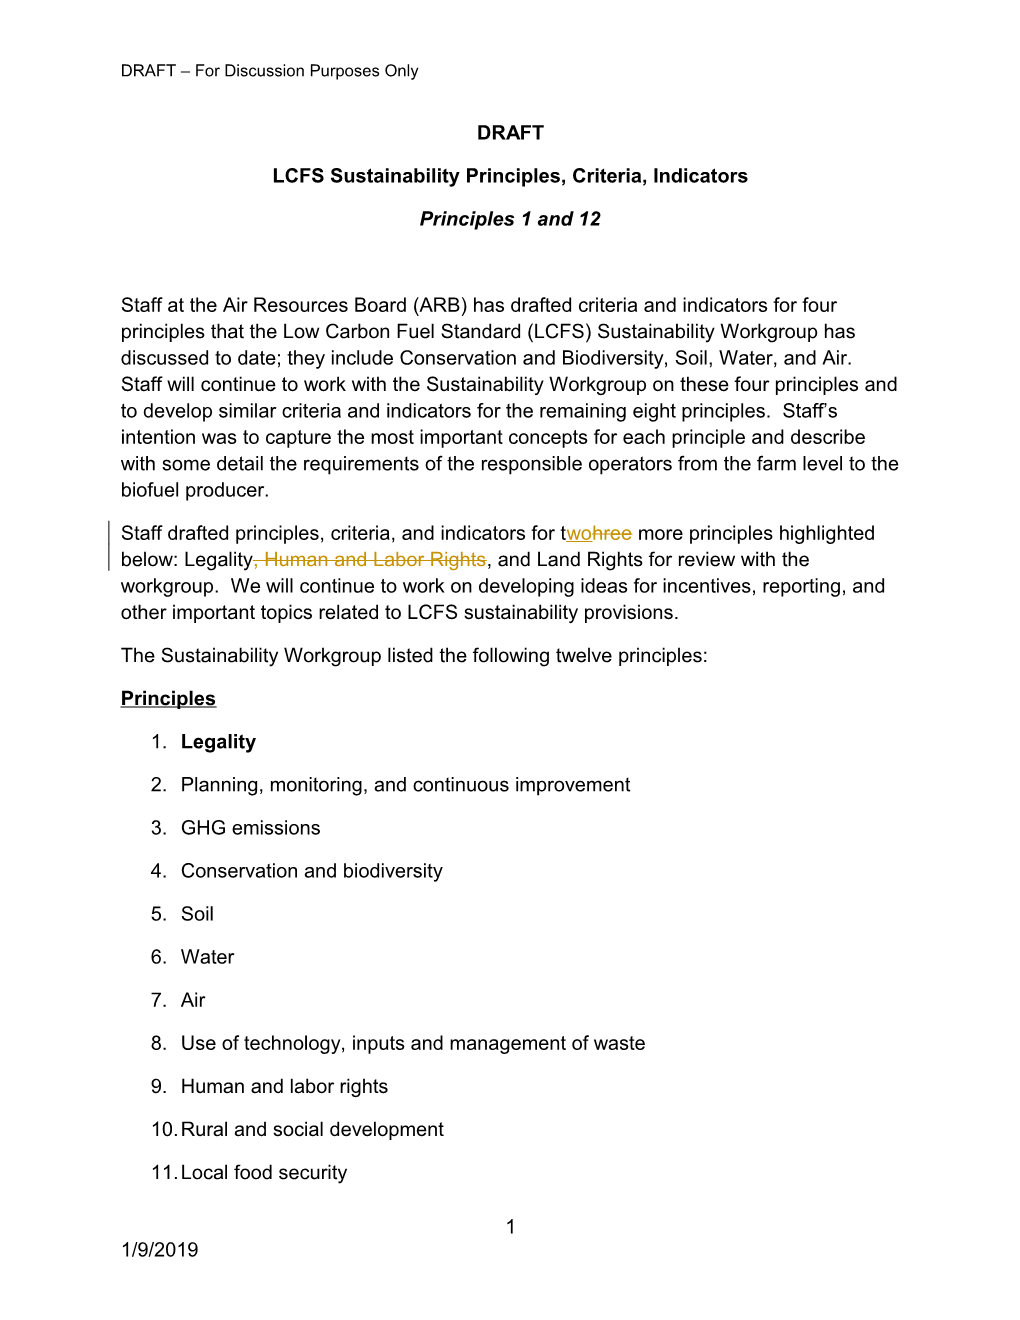 LCFS Sustainability Principles, Criteria, Indicators